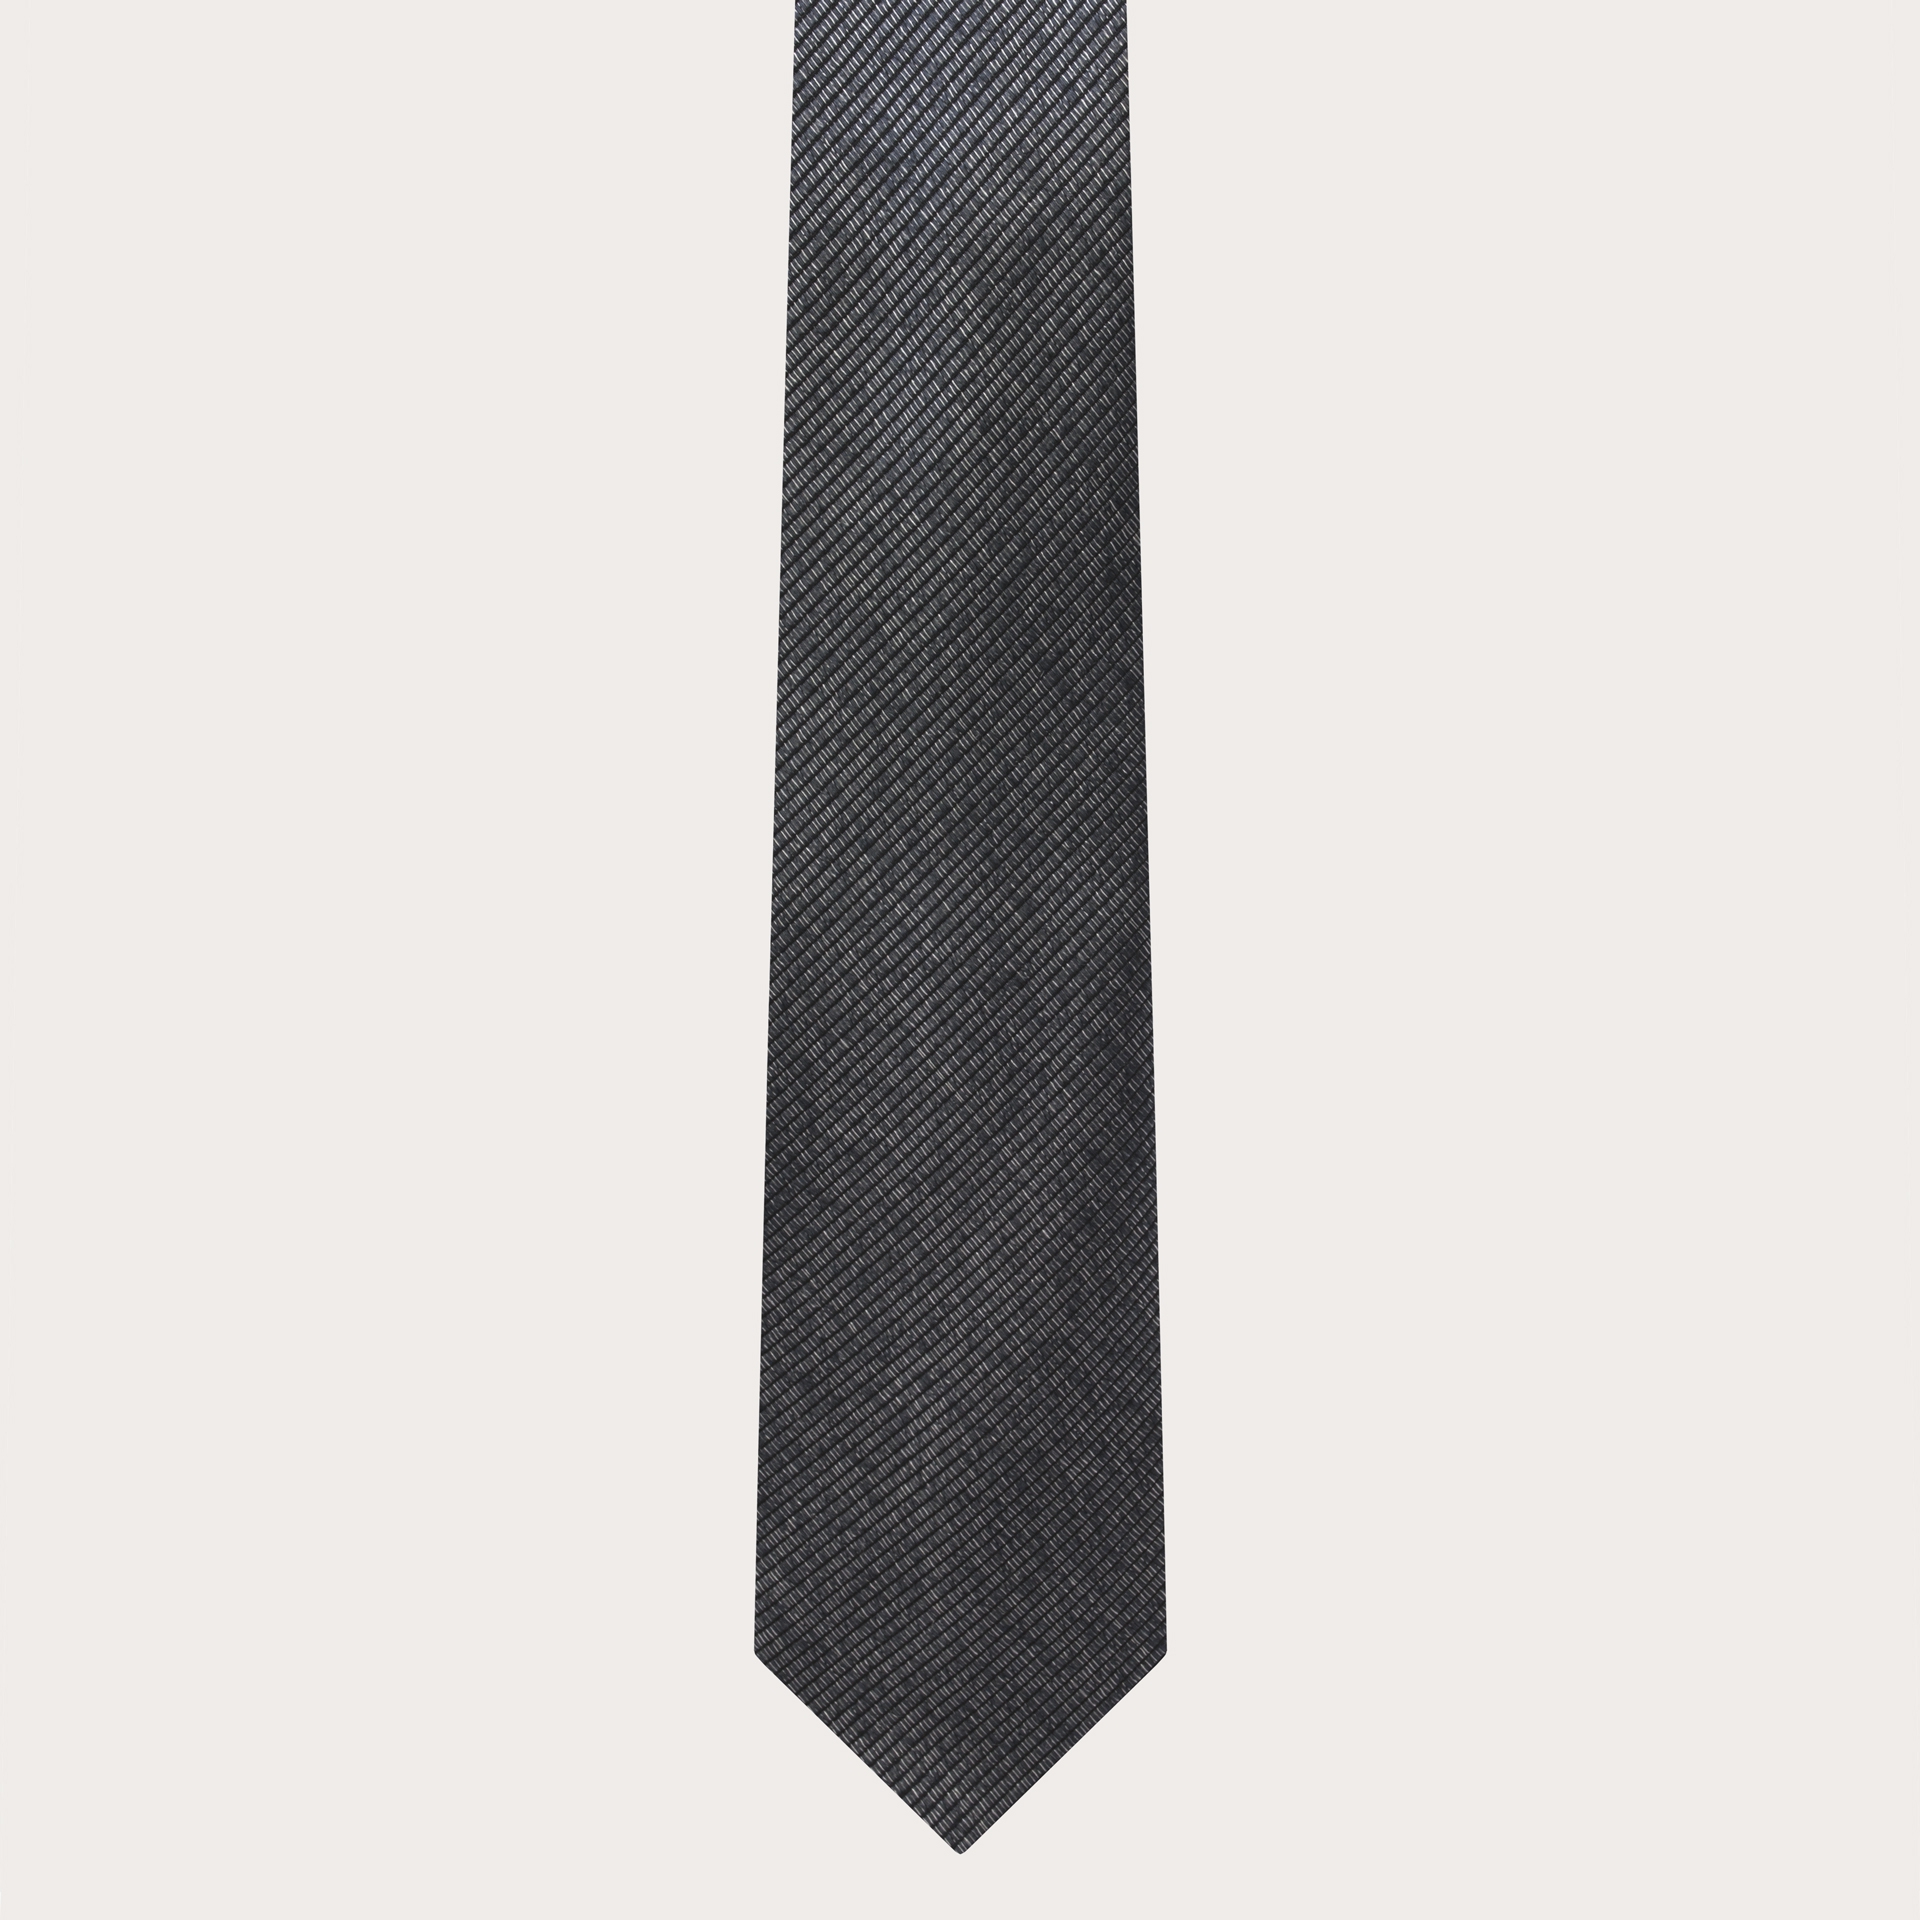 BRUCLE Narrow men's necktie in black and silver melange jacquard silk